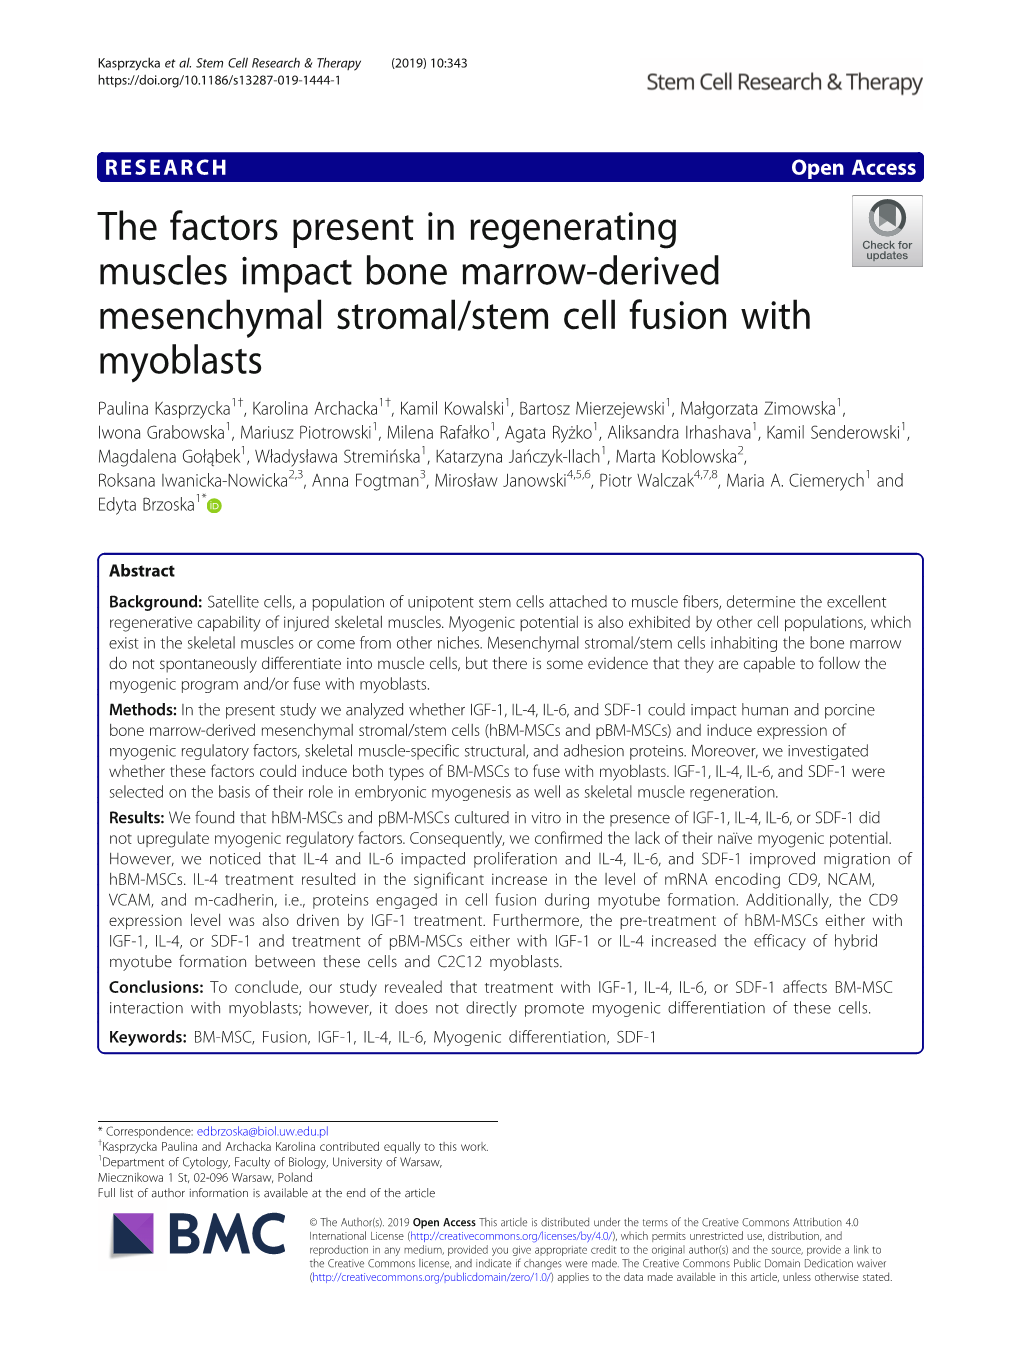 The Factors Present in Regenerating Muscles Impact Bone Marrow